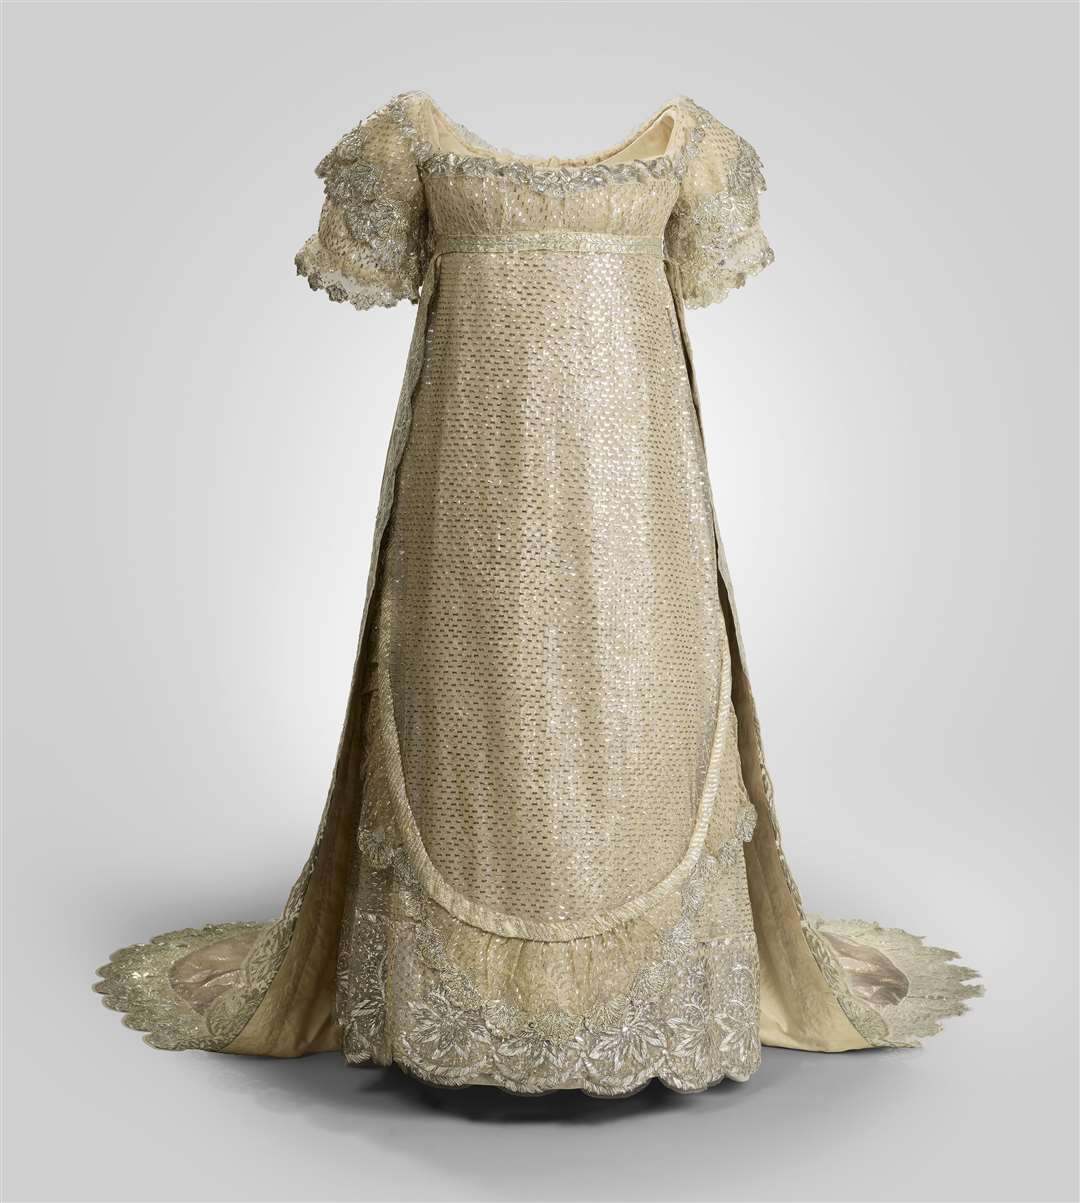 Princess Charlotte’s wedding dress (Royal Collection Trust/HM King Charles III/PA)